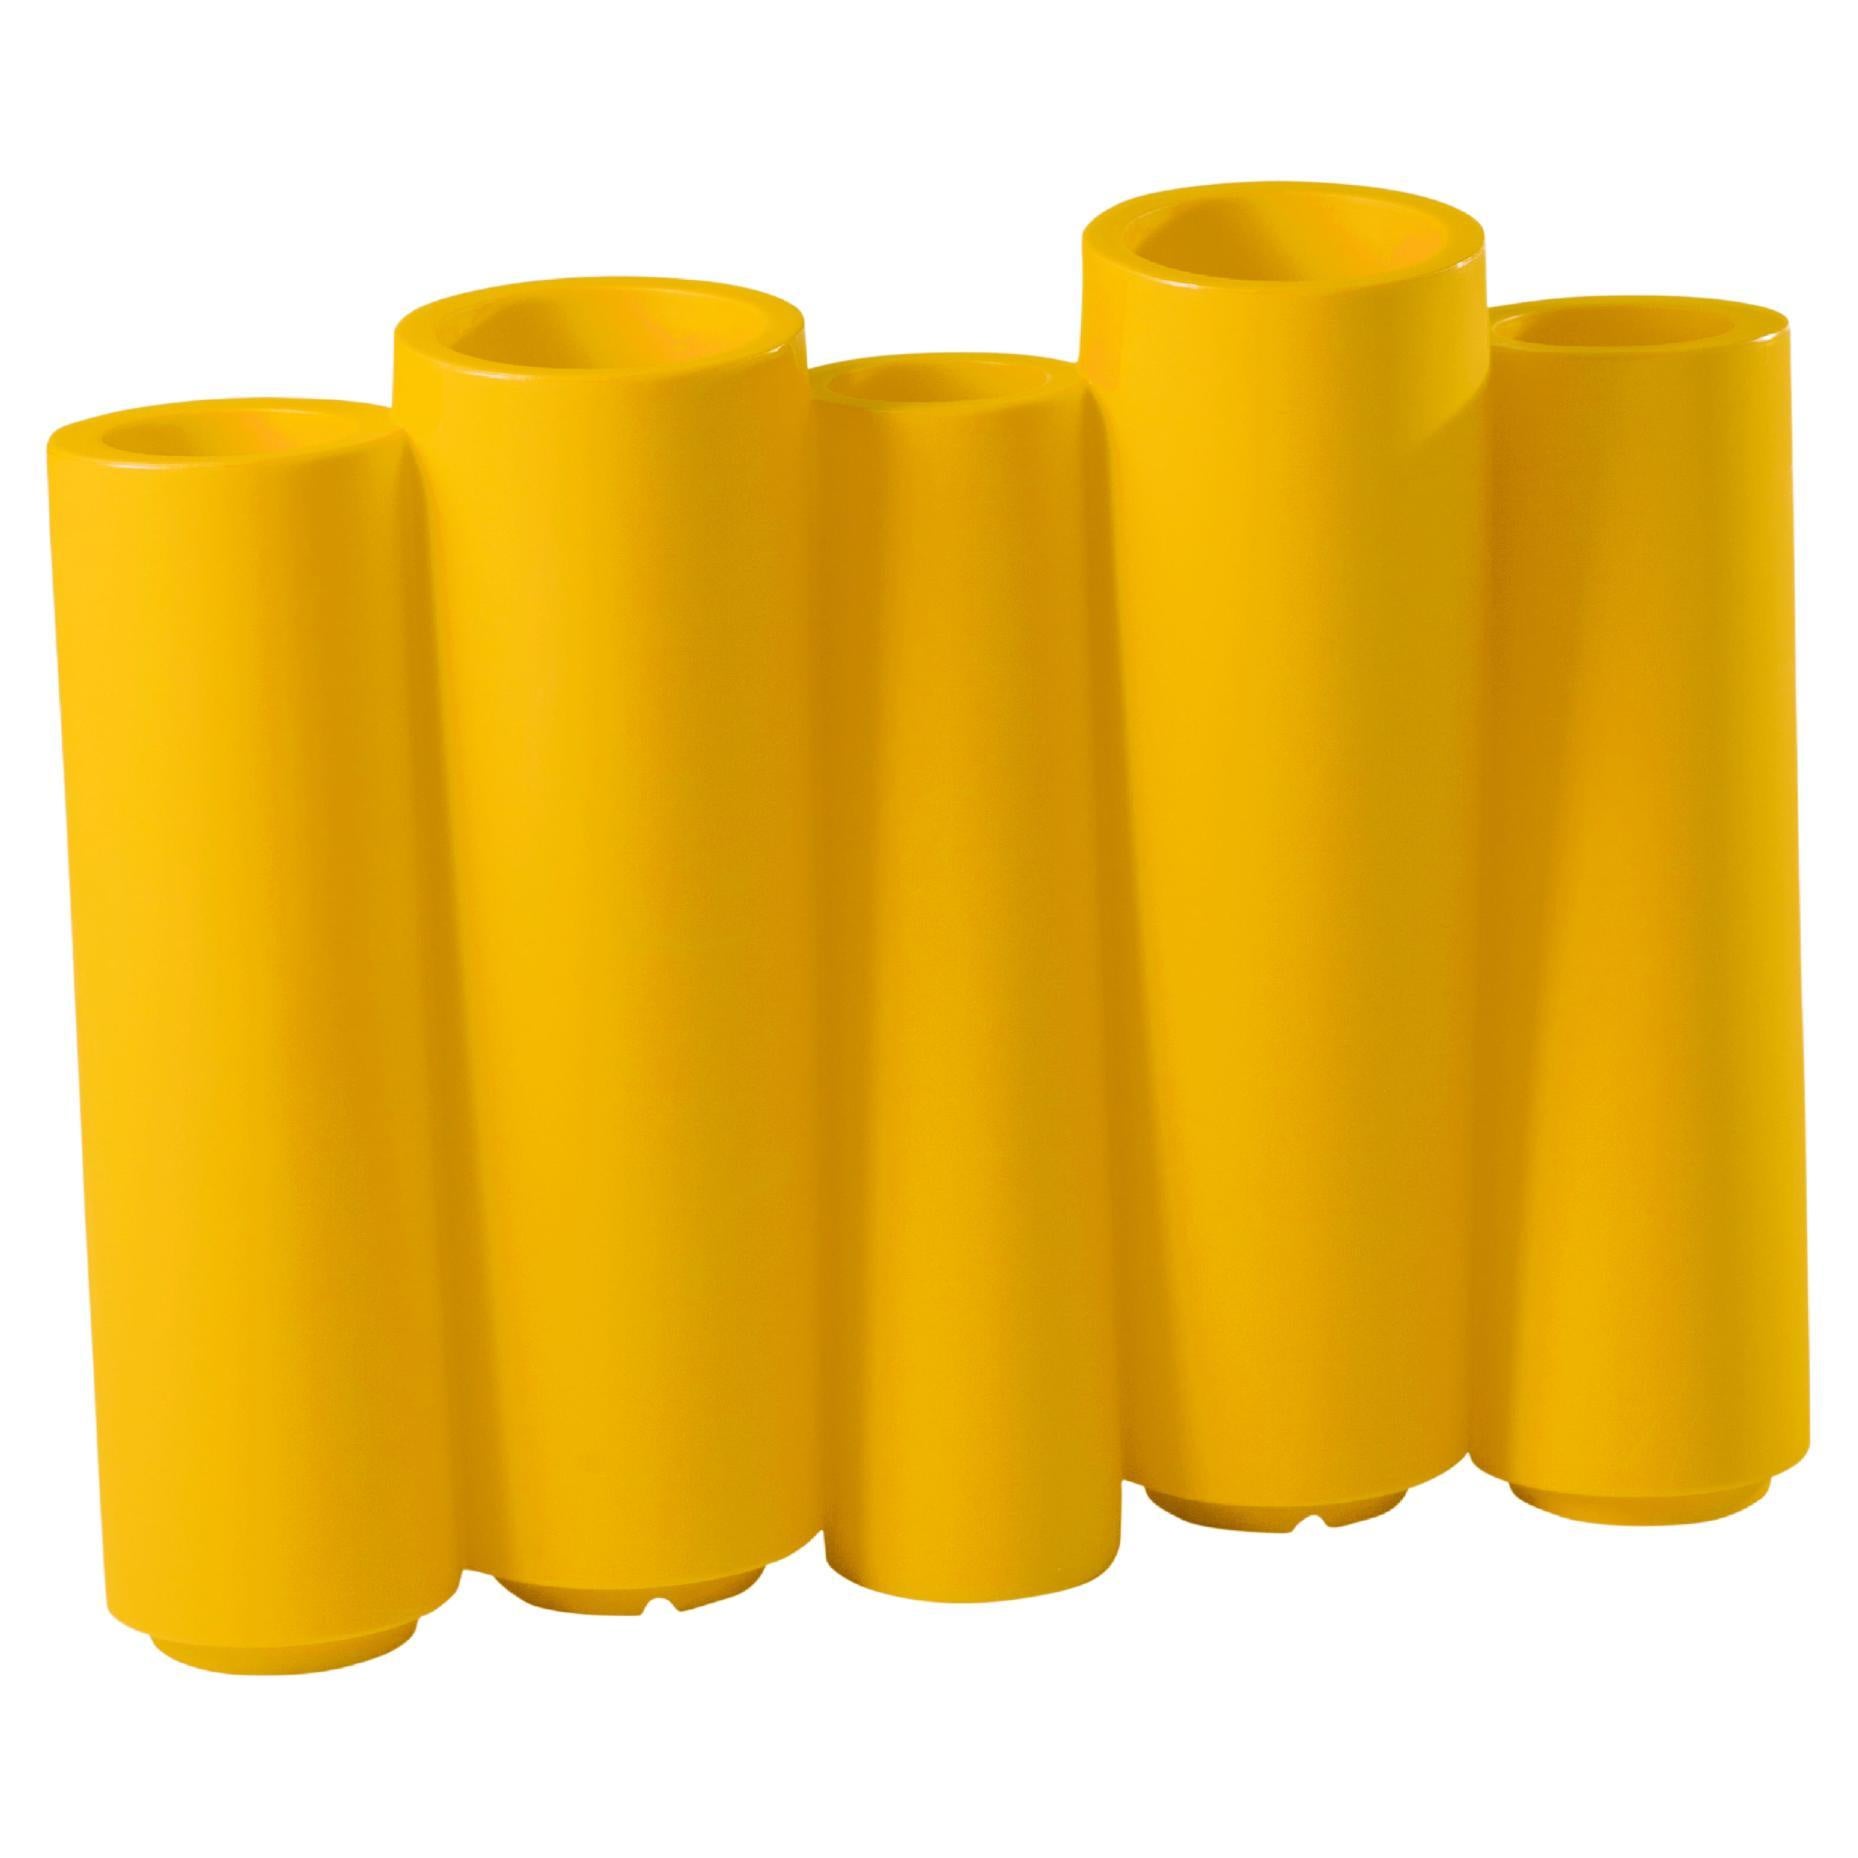 Slide Design Bamboo Cachepot in Saffron Yellow by Tous Les Trois For Sale